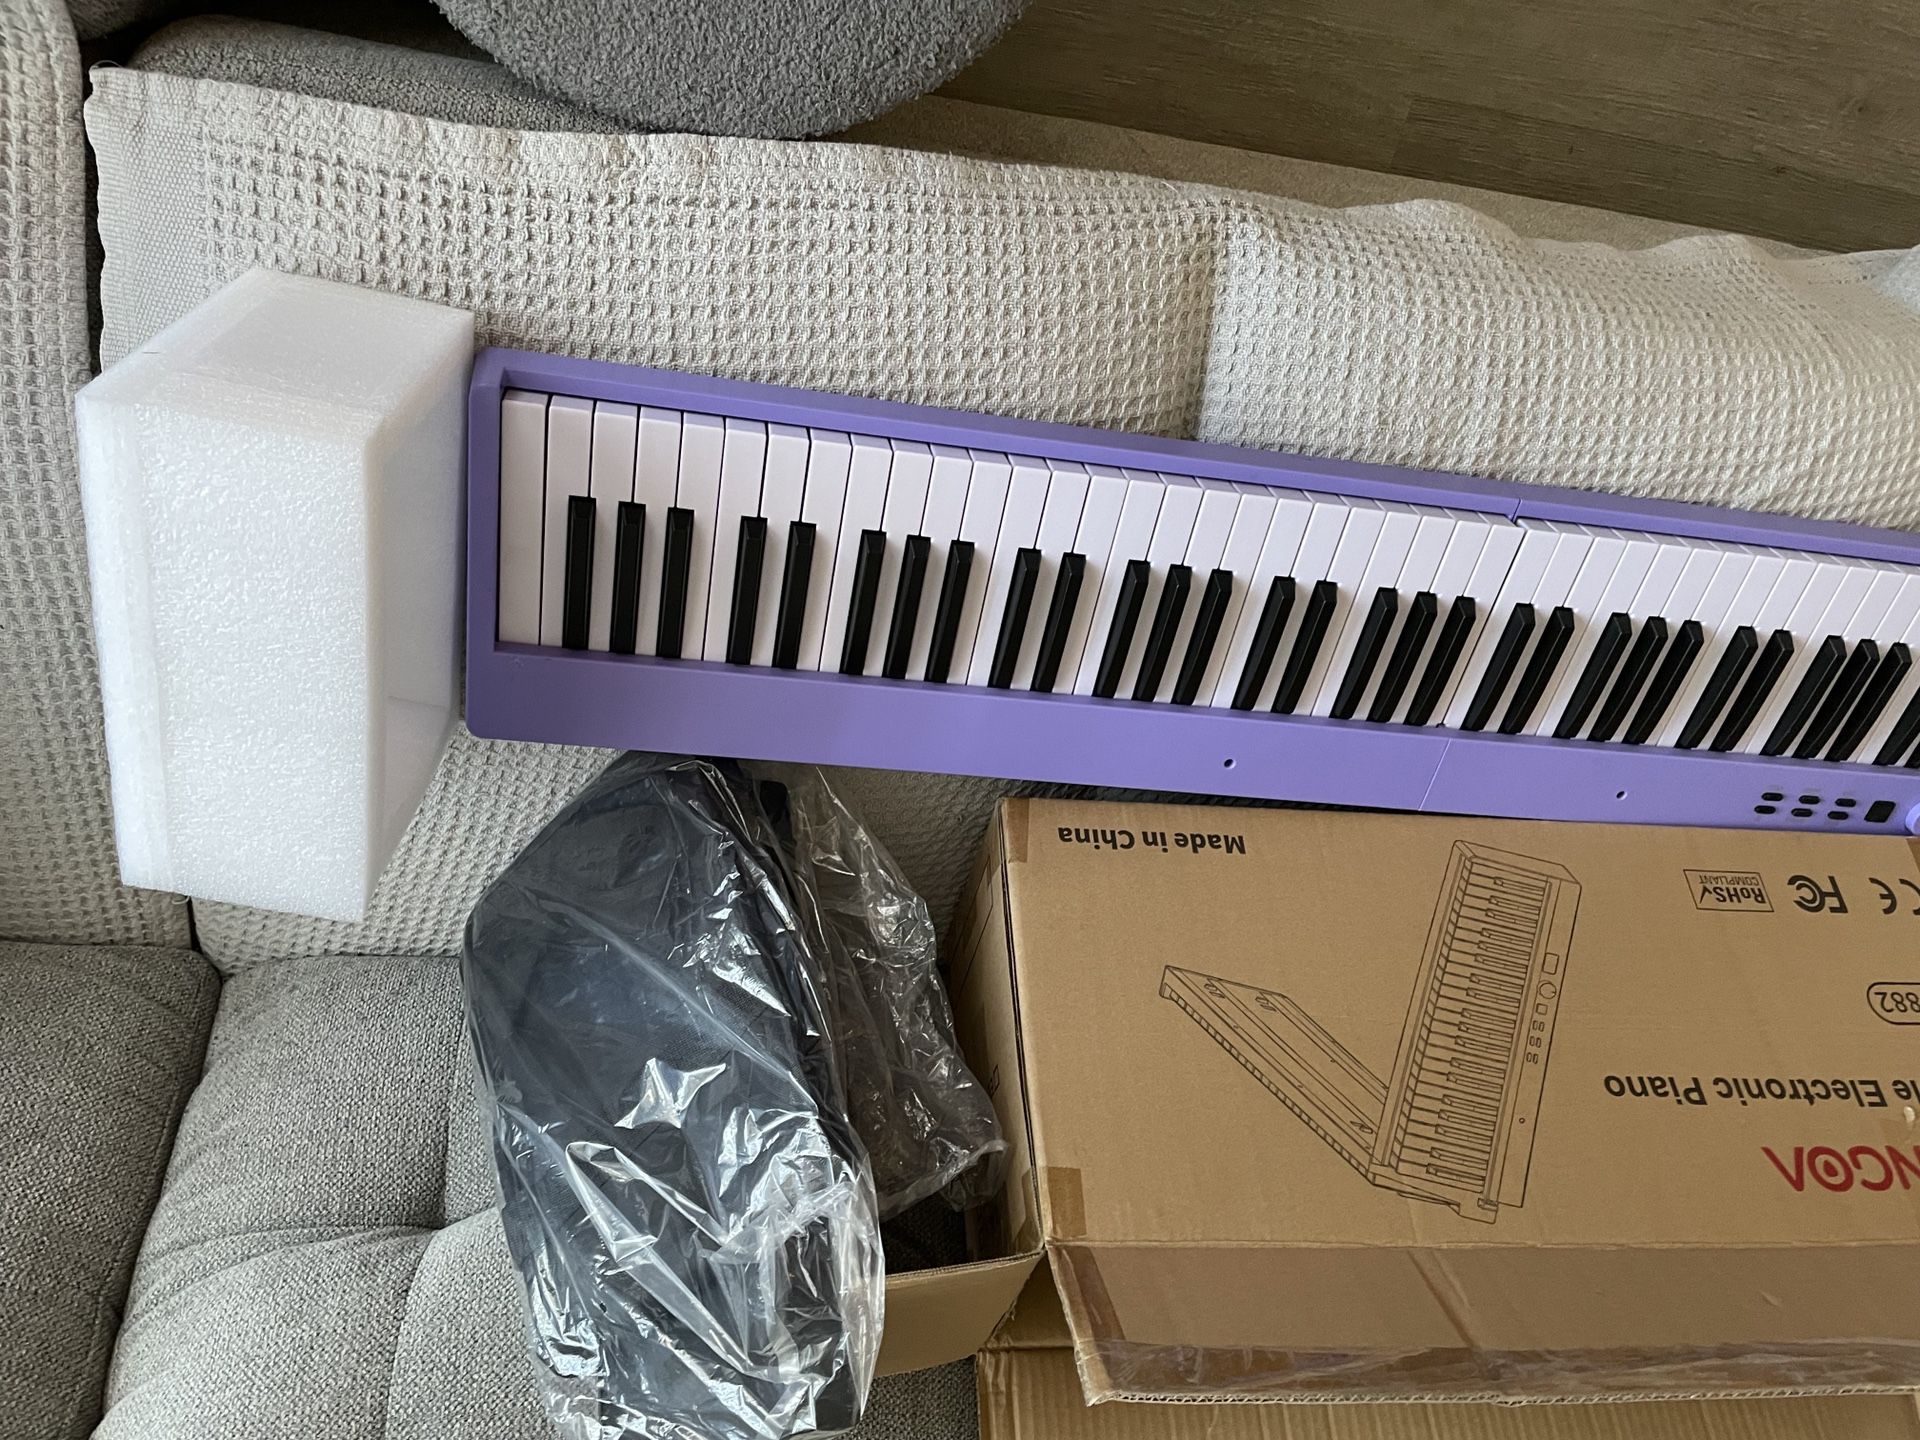 Vangoa Folding Piano Keyboard 88 Key Full Size Semi-Weighted Bluetooth Portable Foldable Electric Keyboard Piano with Light up Keys, Sheet Music Stand